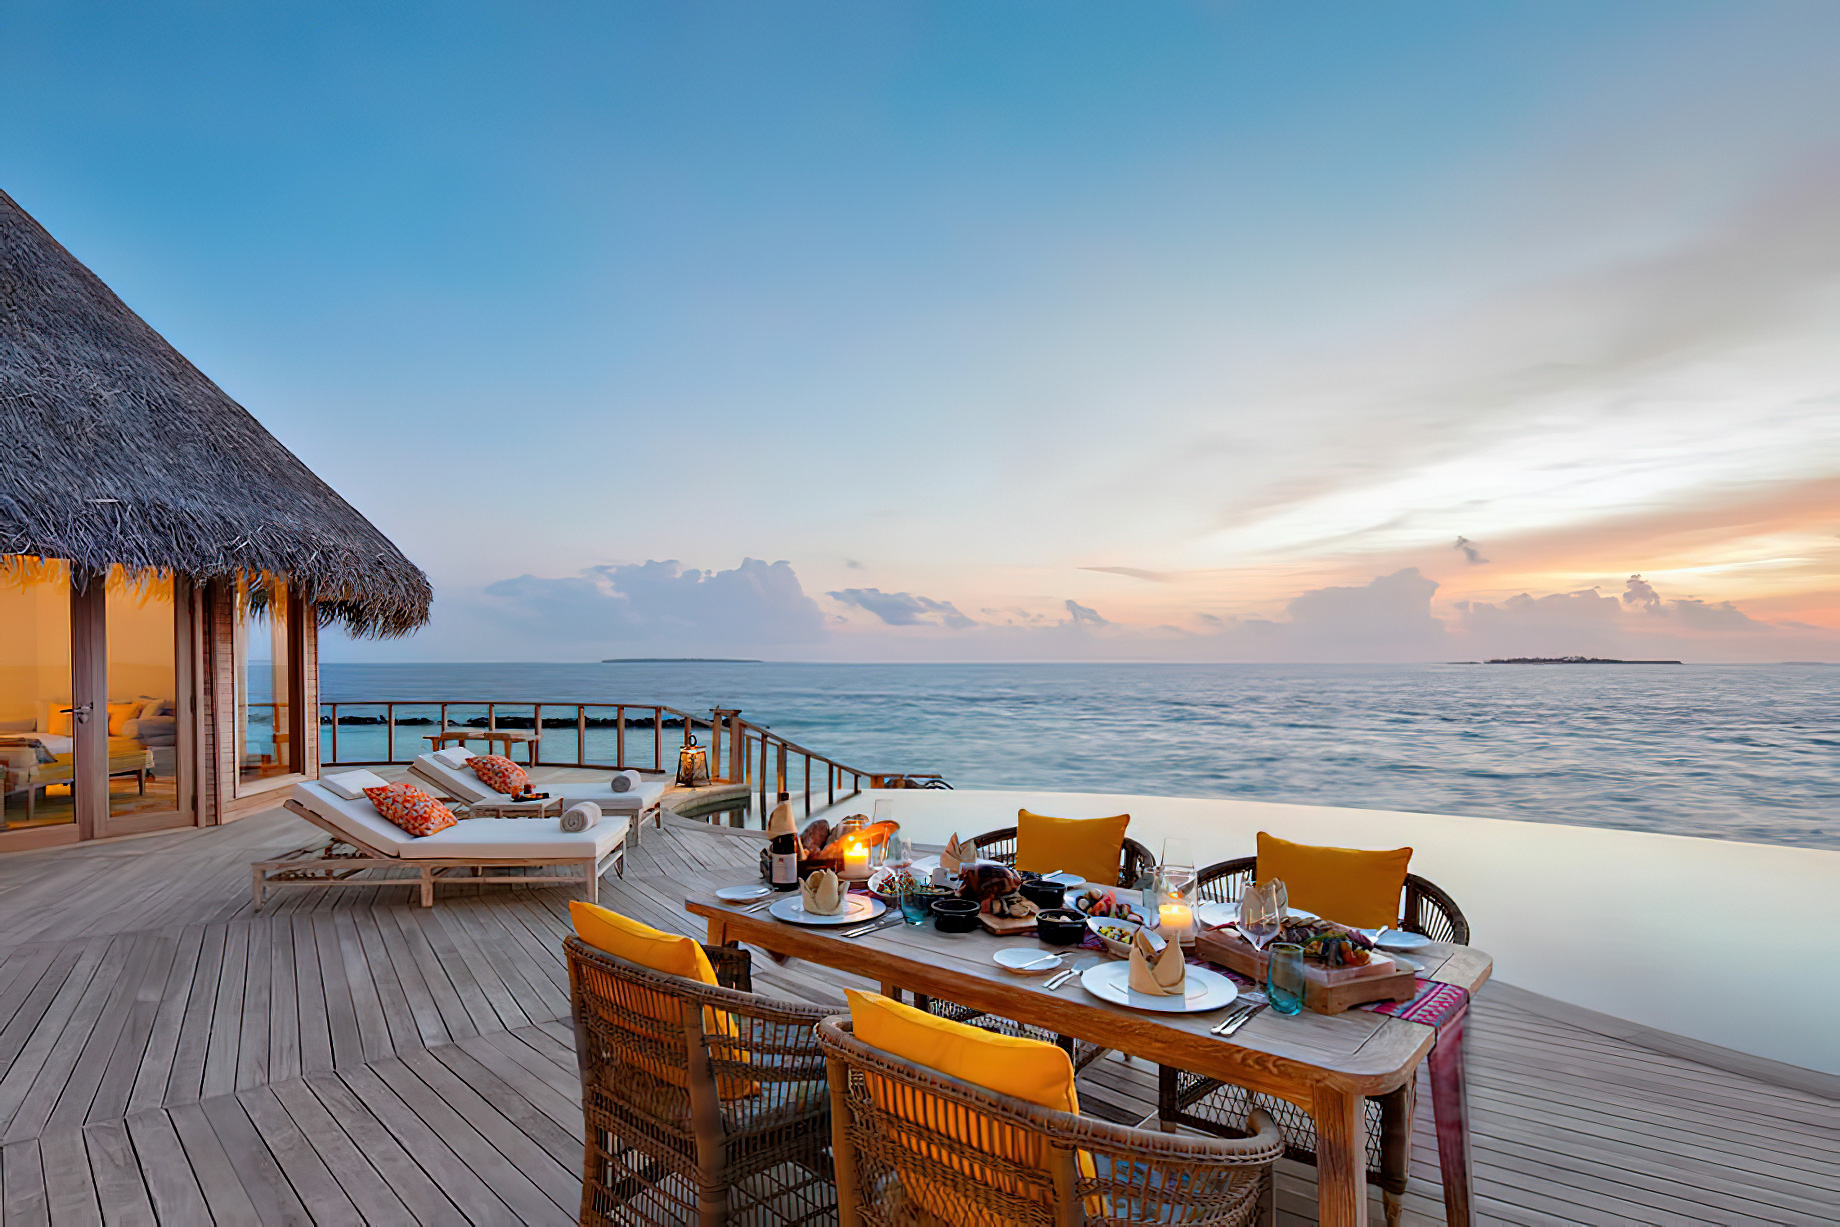 The Nautilus Maldives Resort – Thiladhoo Island, Maldives – Overwater Residence Pool Deck Sunset